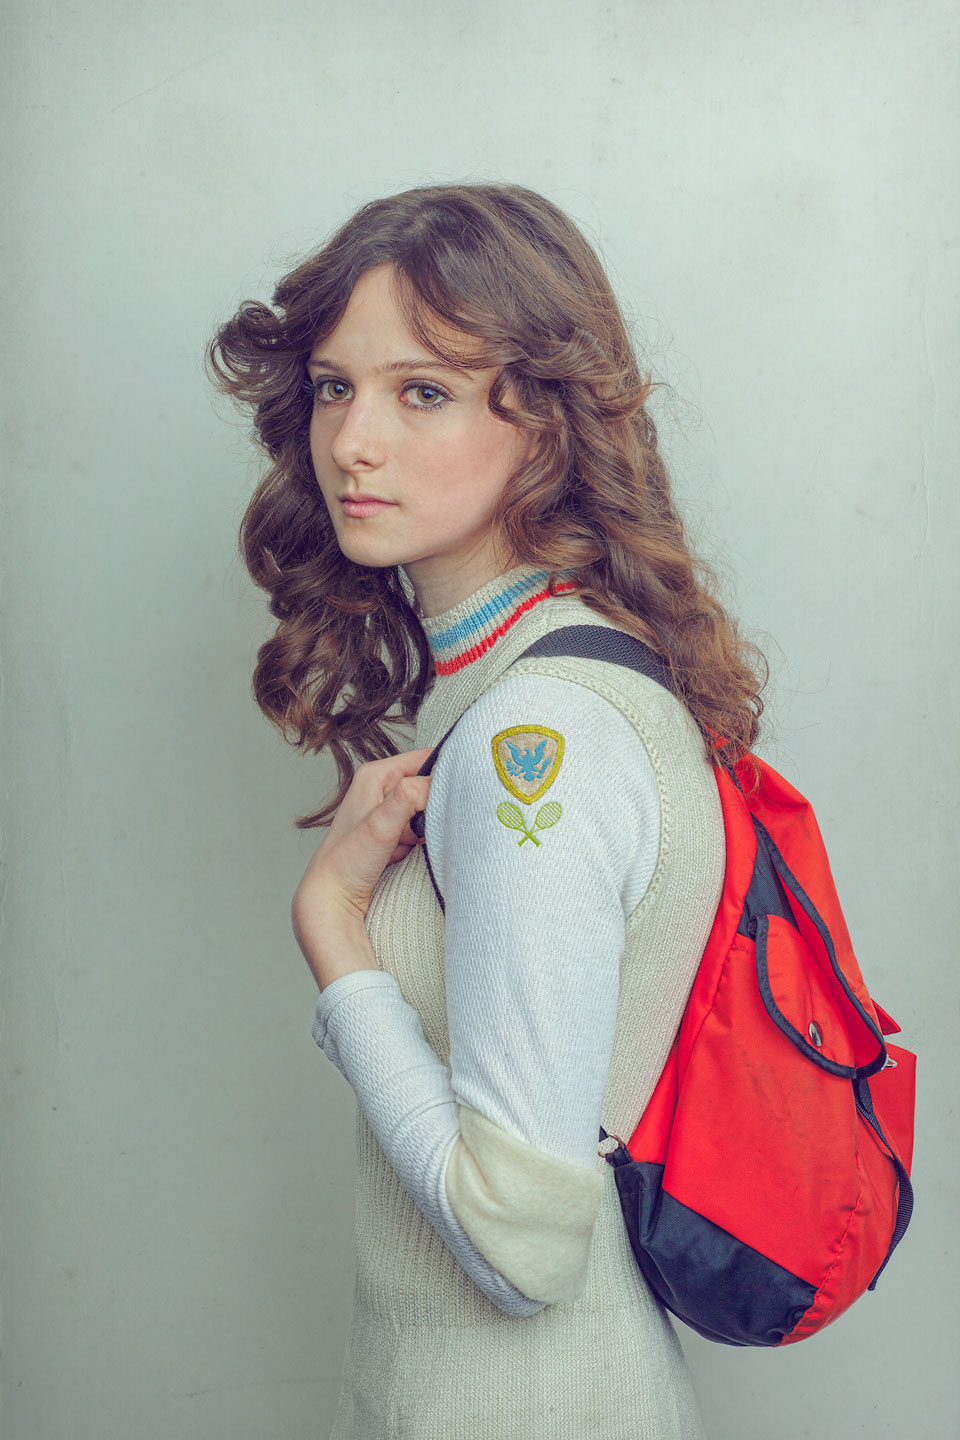 Girl in winter uniform 2 - Project Astoria: Test 01 - Art by Todd Baxter